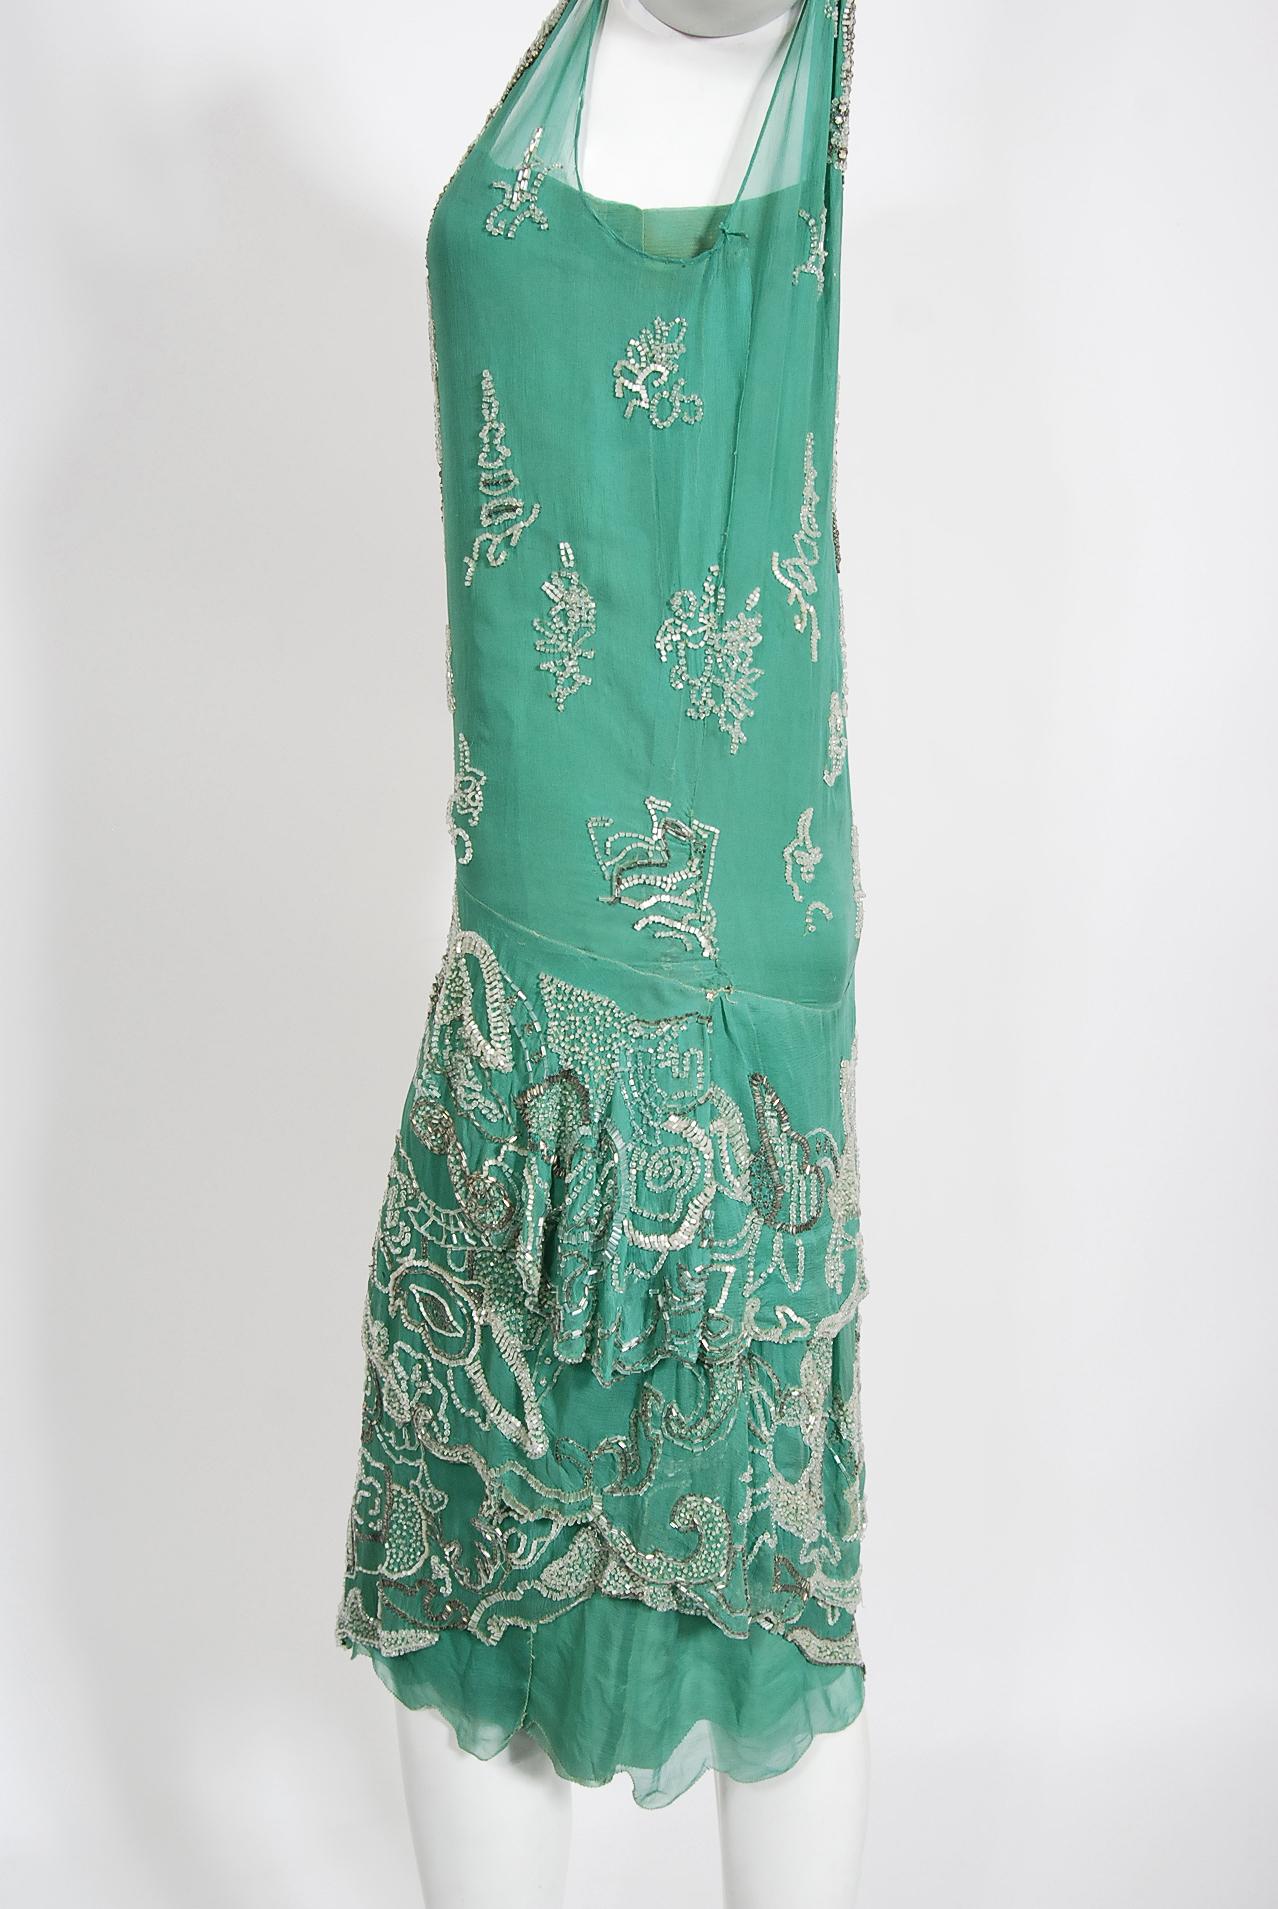 Vintage 1920's Jean Patou Haute Couture Attributed Seafoam Beaded Chiffon Dress  1